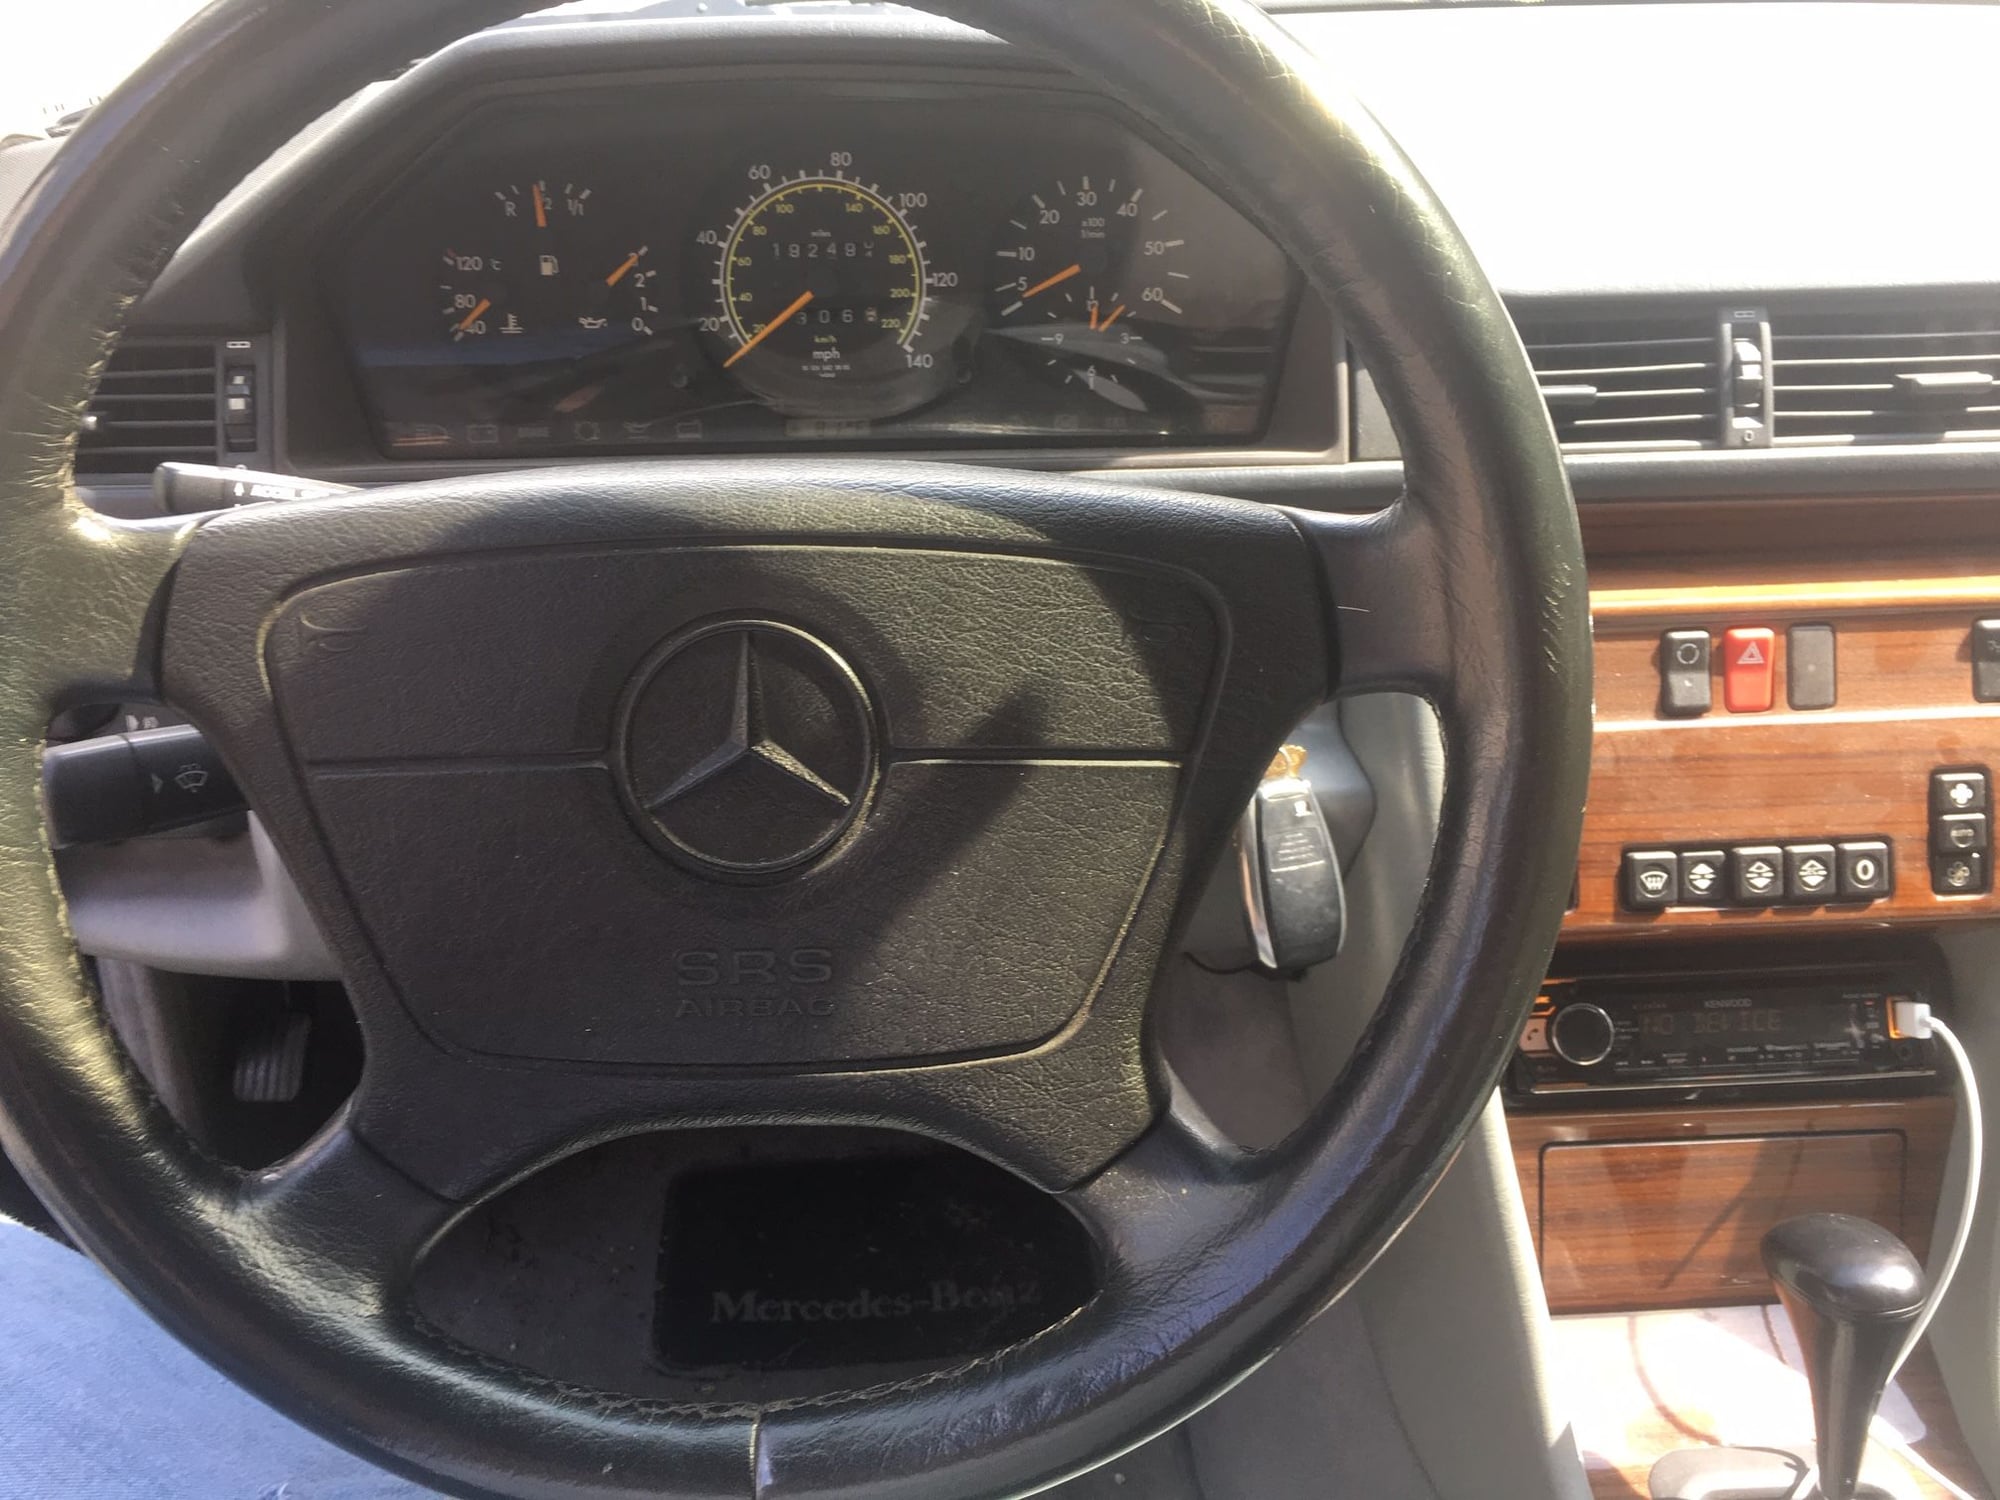 1995 Mercedes-Benz E300 - FS: 1995 W124 E 300 Diesel Black / Gray Third Owner - Used - VIN WDEBEB31E3SC13307 - 192,000 Miles - 6 cyl - Sedan - Black - Spokane, WA 99204, United States